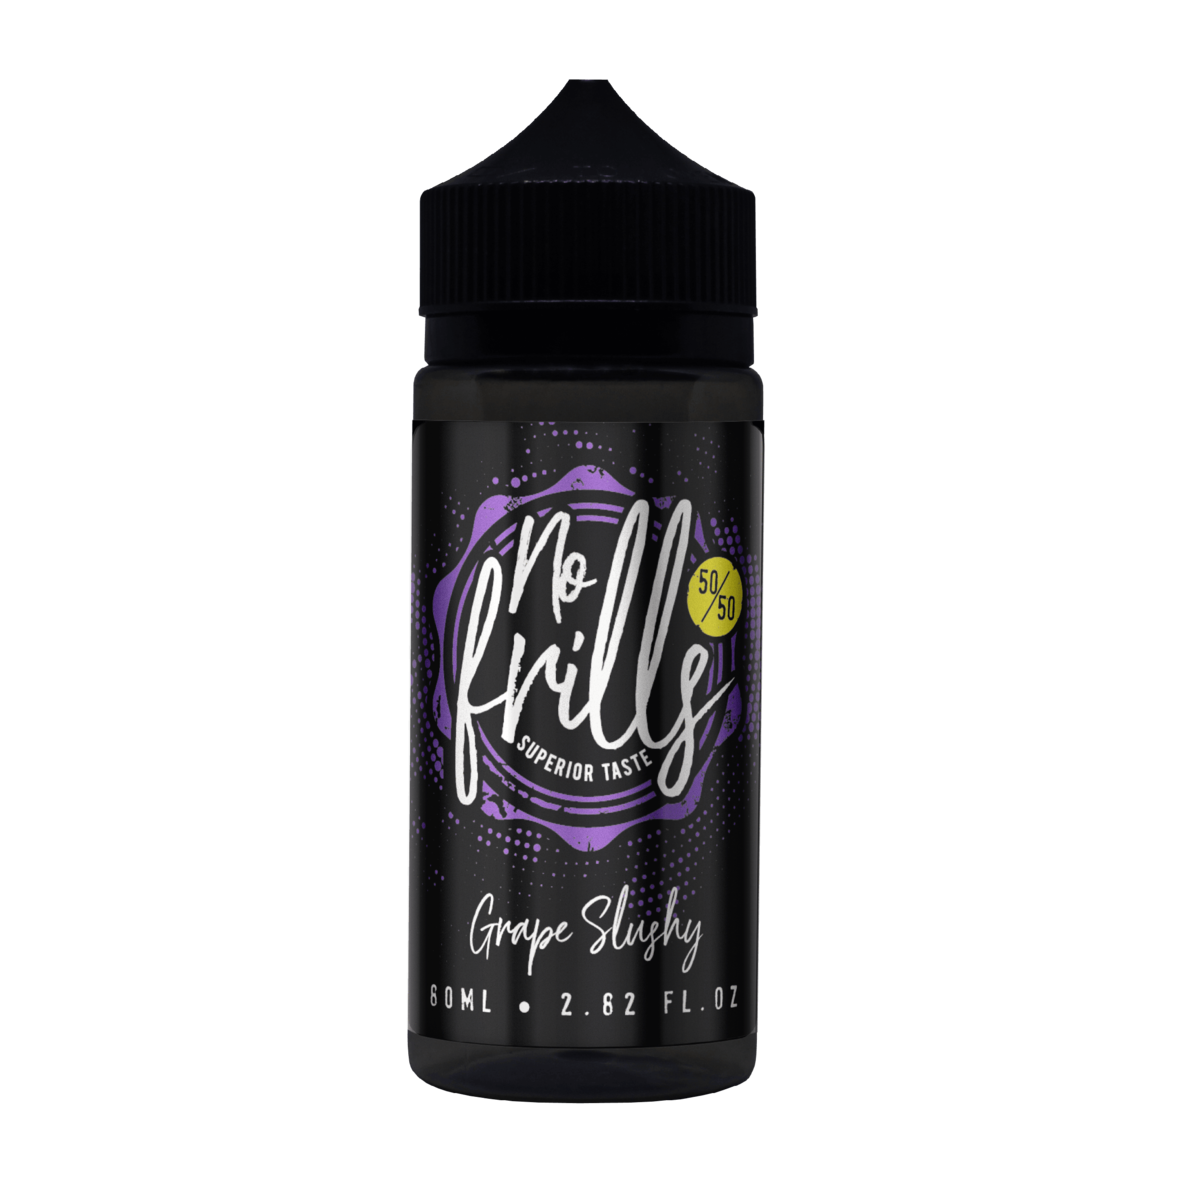 Grape Slushy E-liquid by No Frills 80ml Shortfill